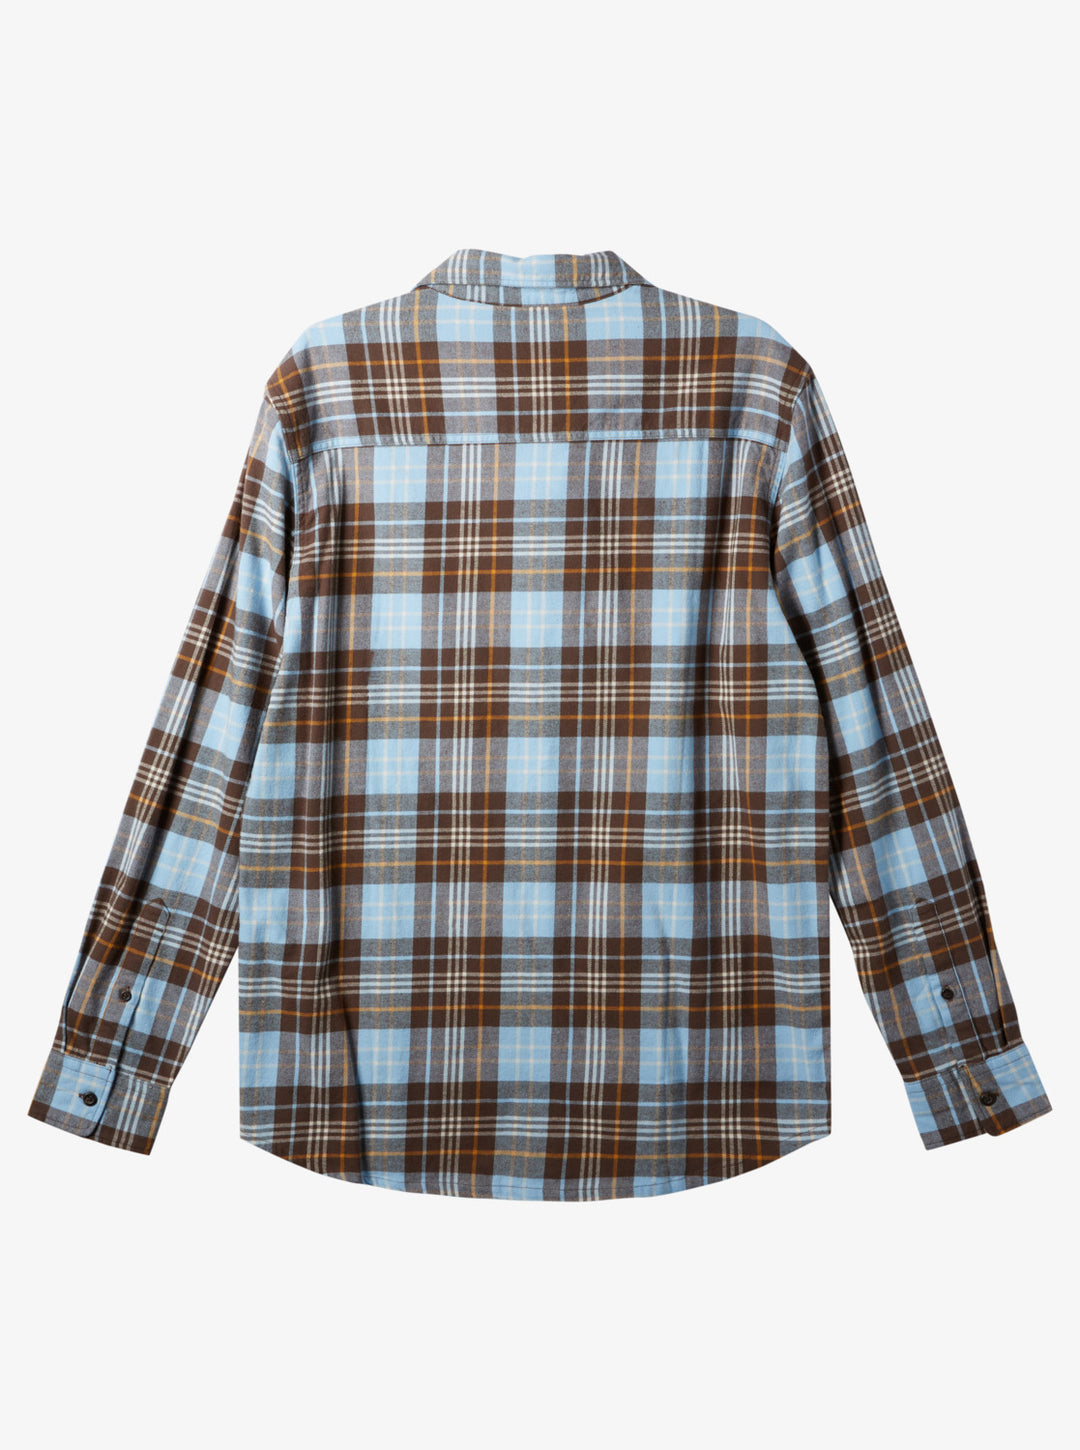 Quiksilver Banchor Long Sleeve Shirt - Major Brown - Sun Diego Boardshop